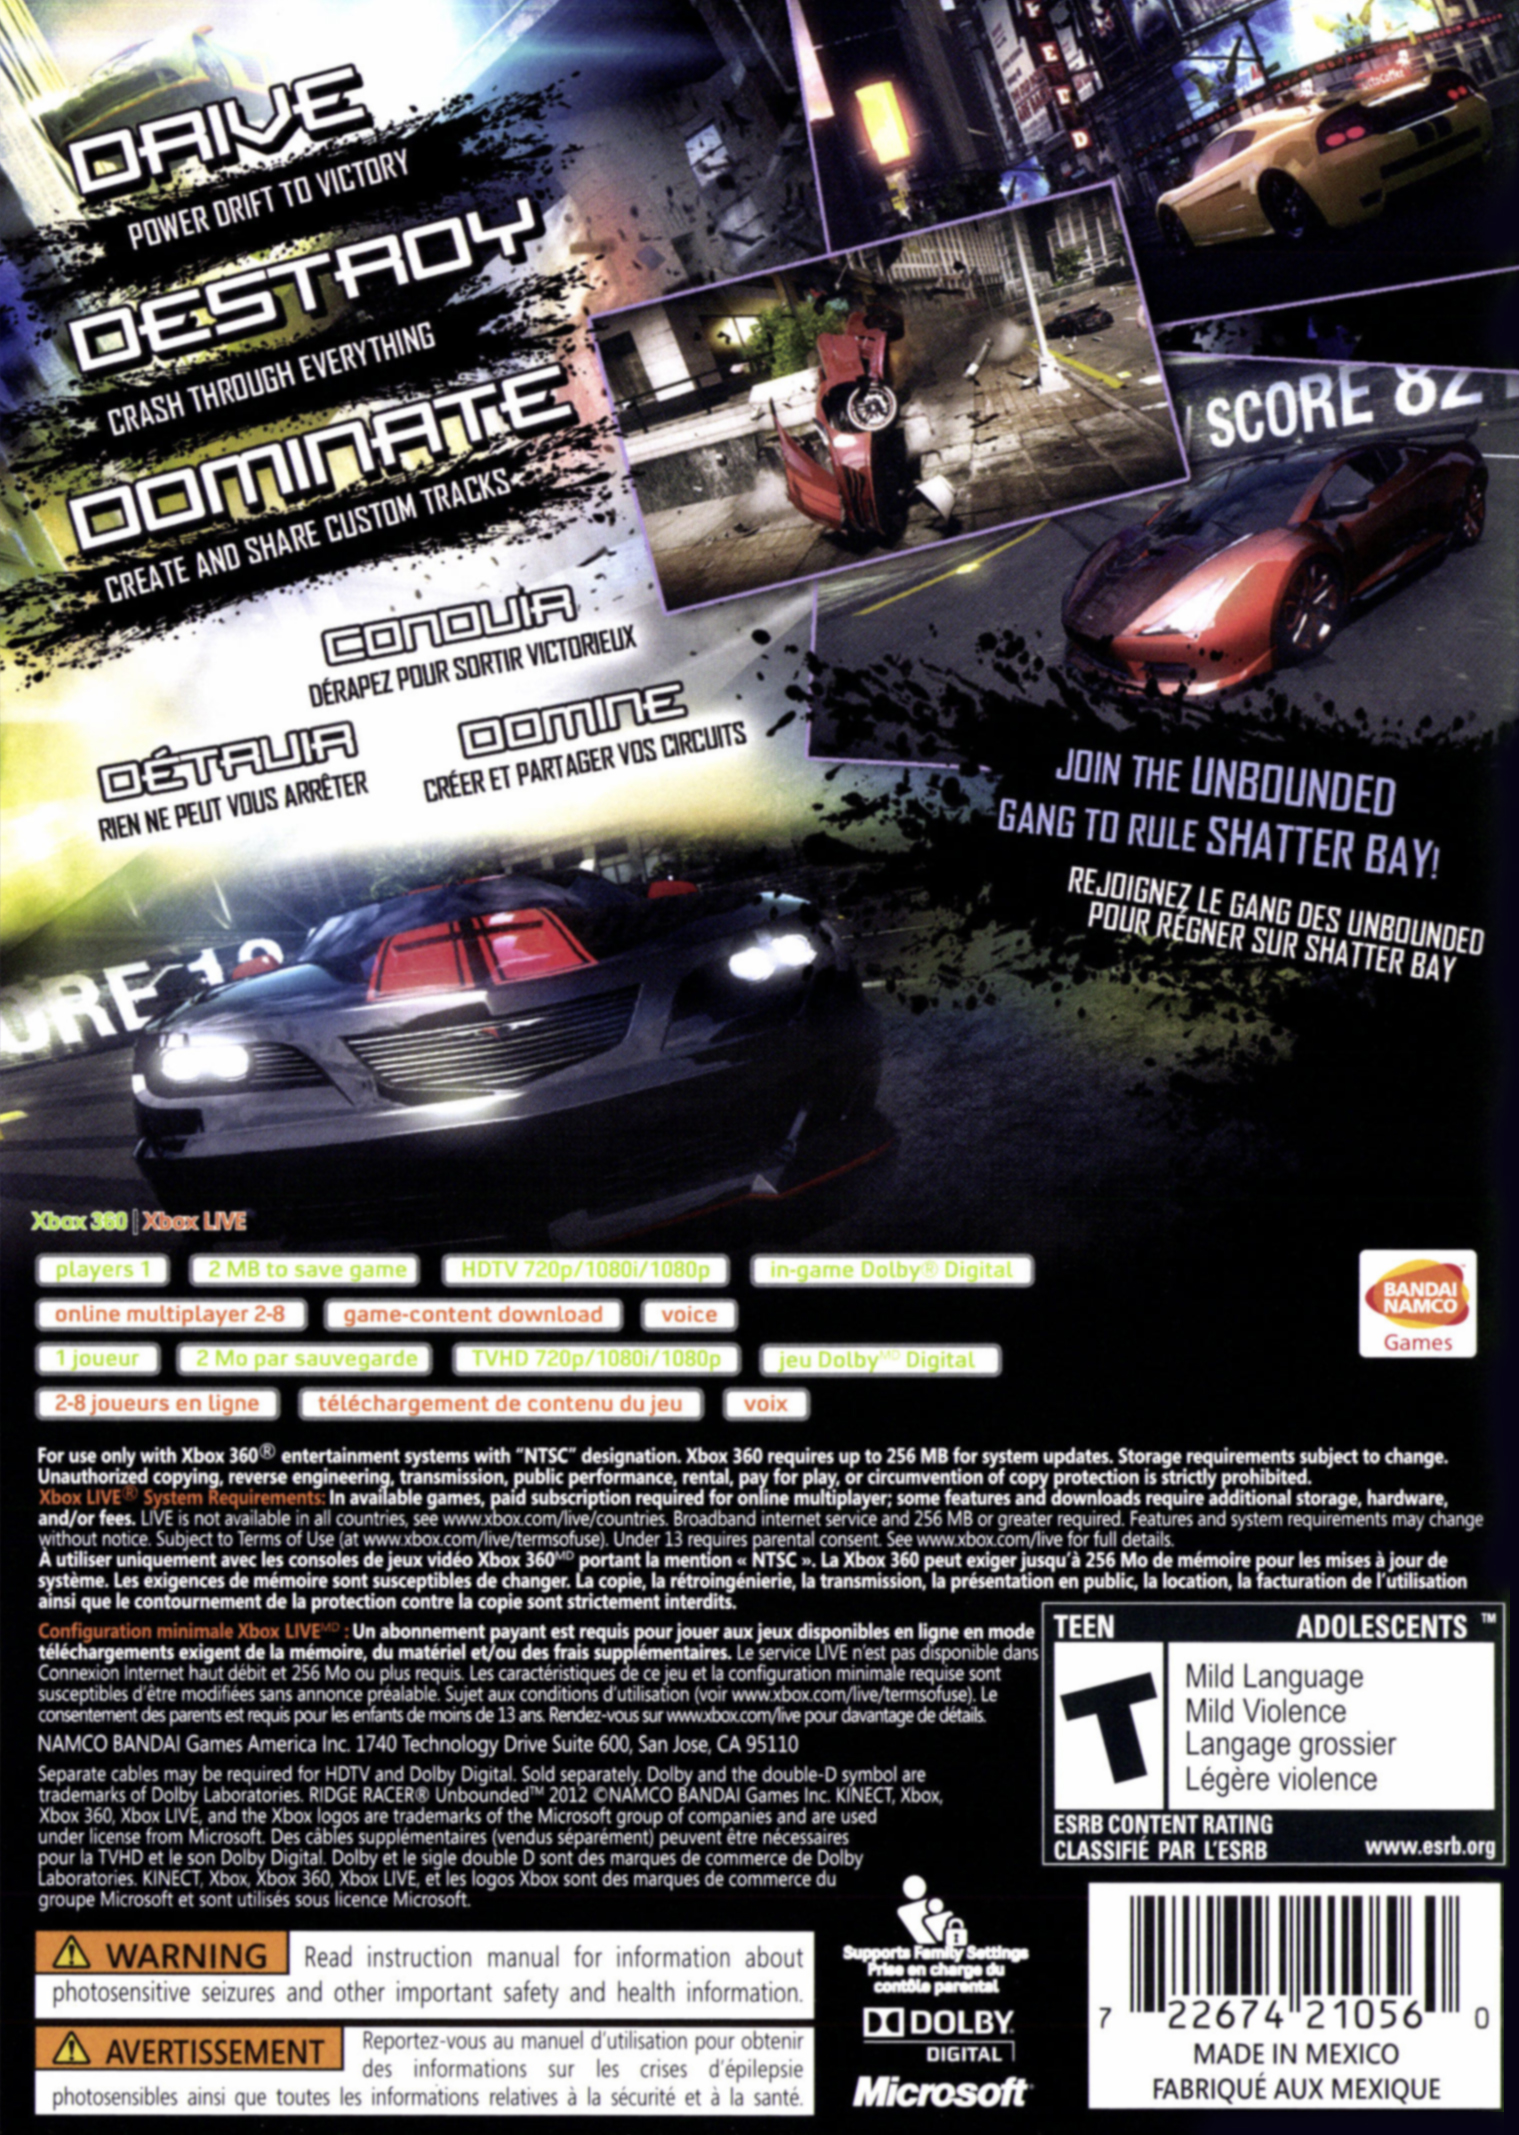 Ridge Racer Unbounded - Xbox 360 - image 2 of 14